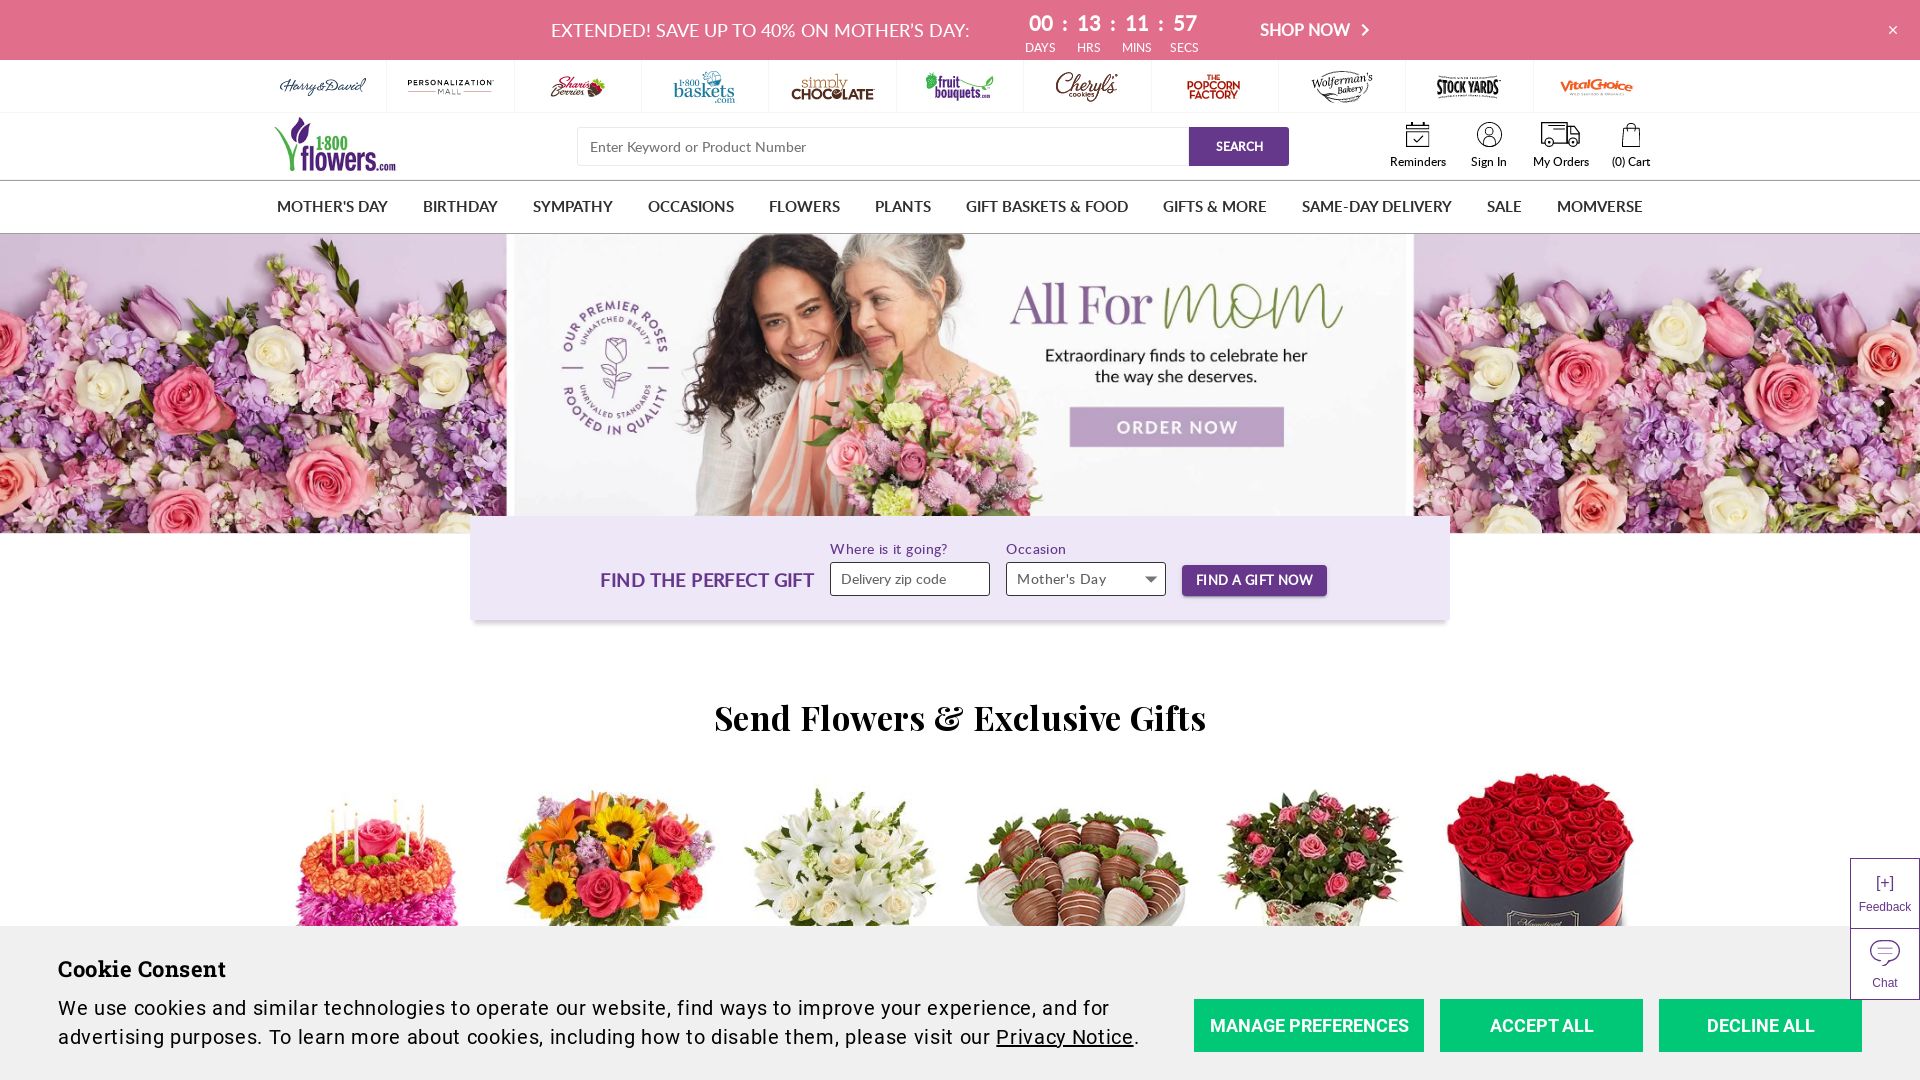 Webseitenstatus 1800flowers.com ist   ONLINE